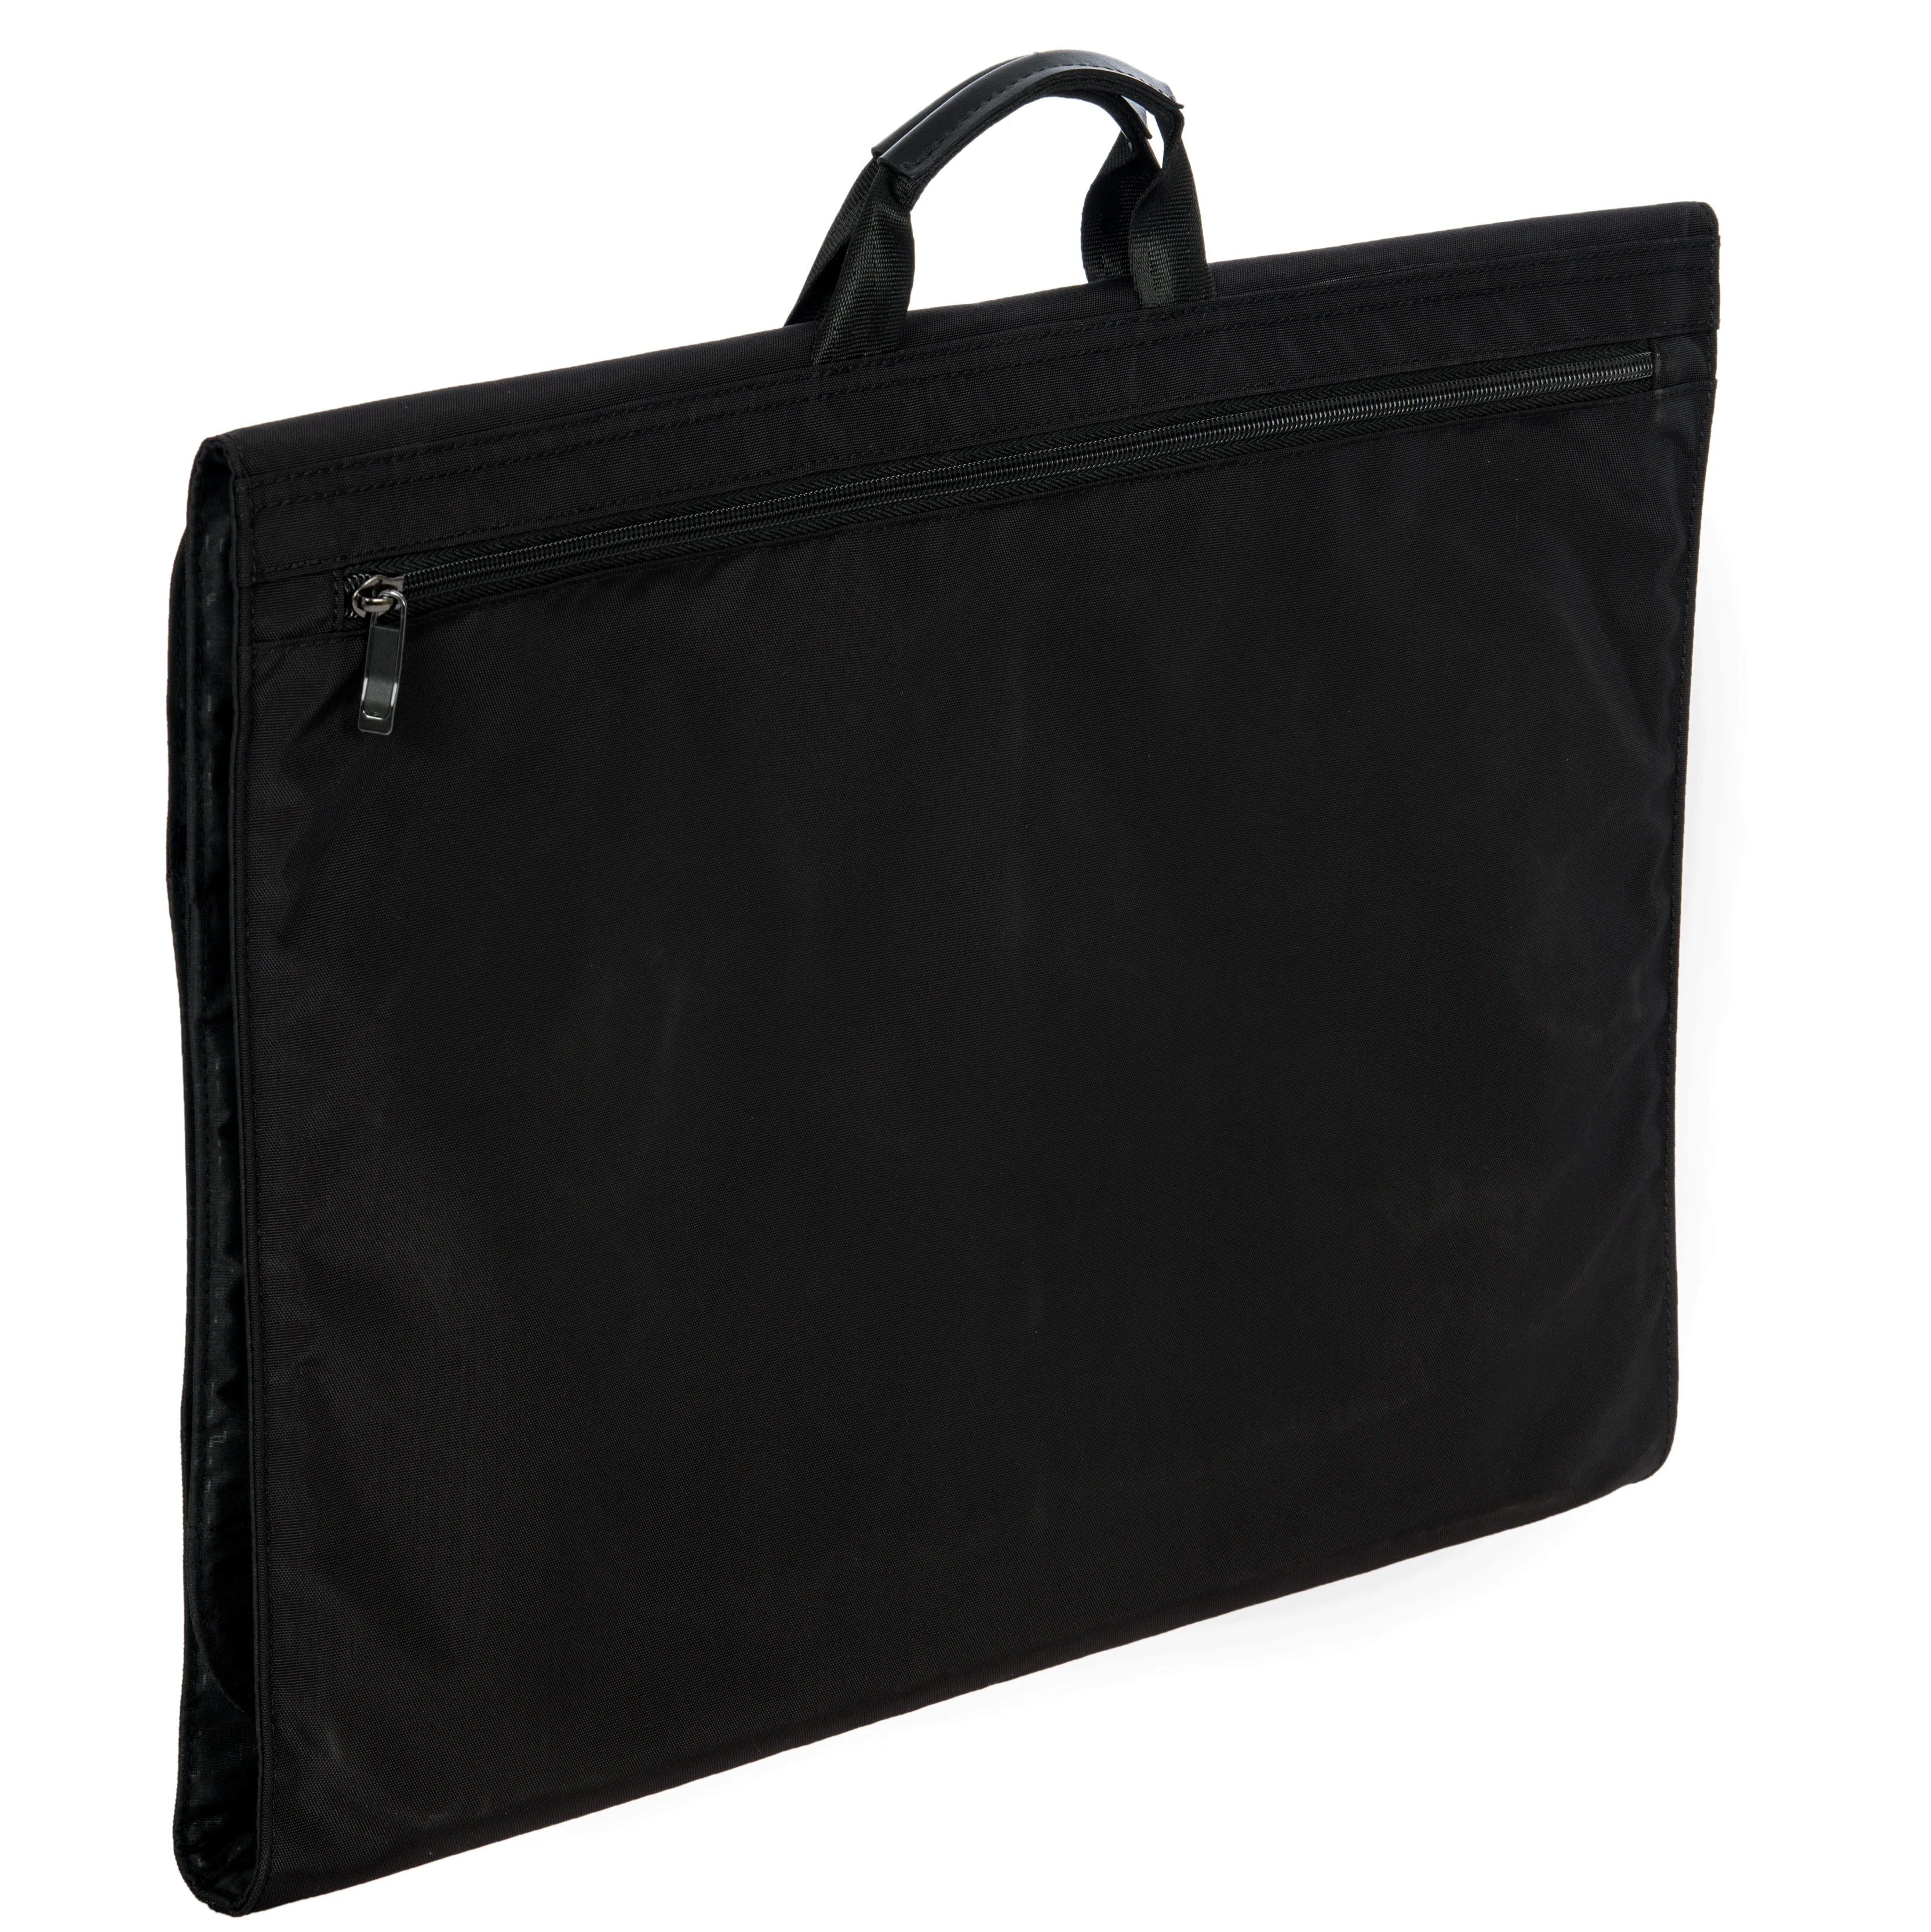 Porsche Design Accessories Garment Bag 48 cm - Black